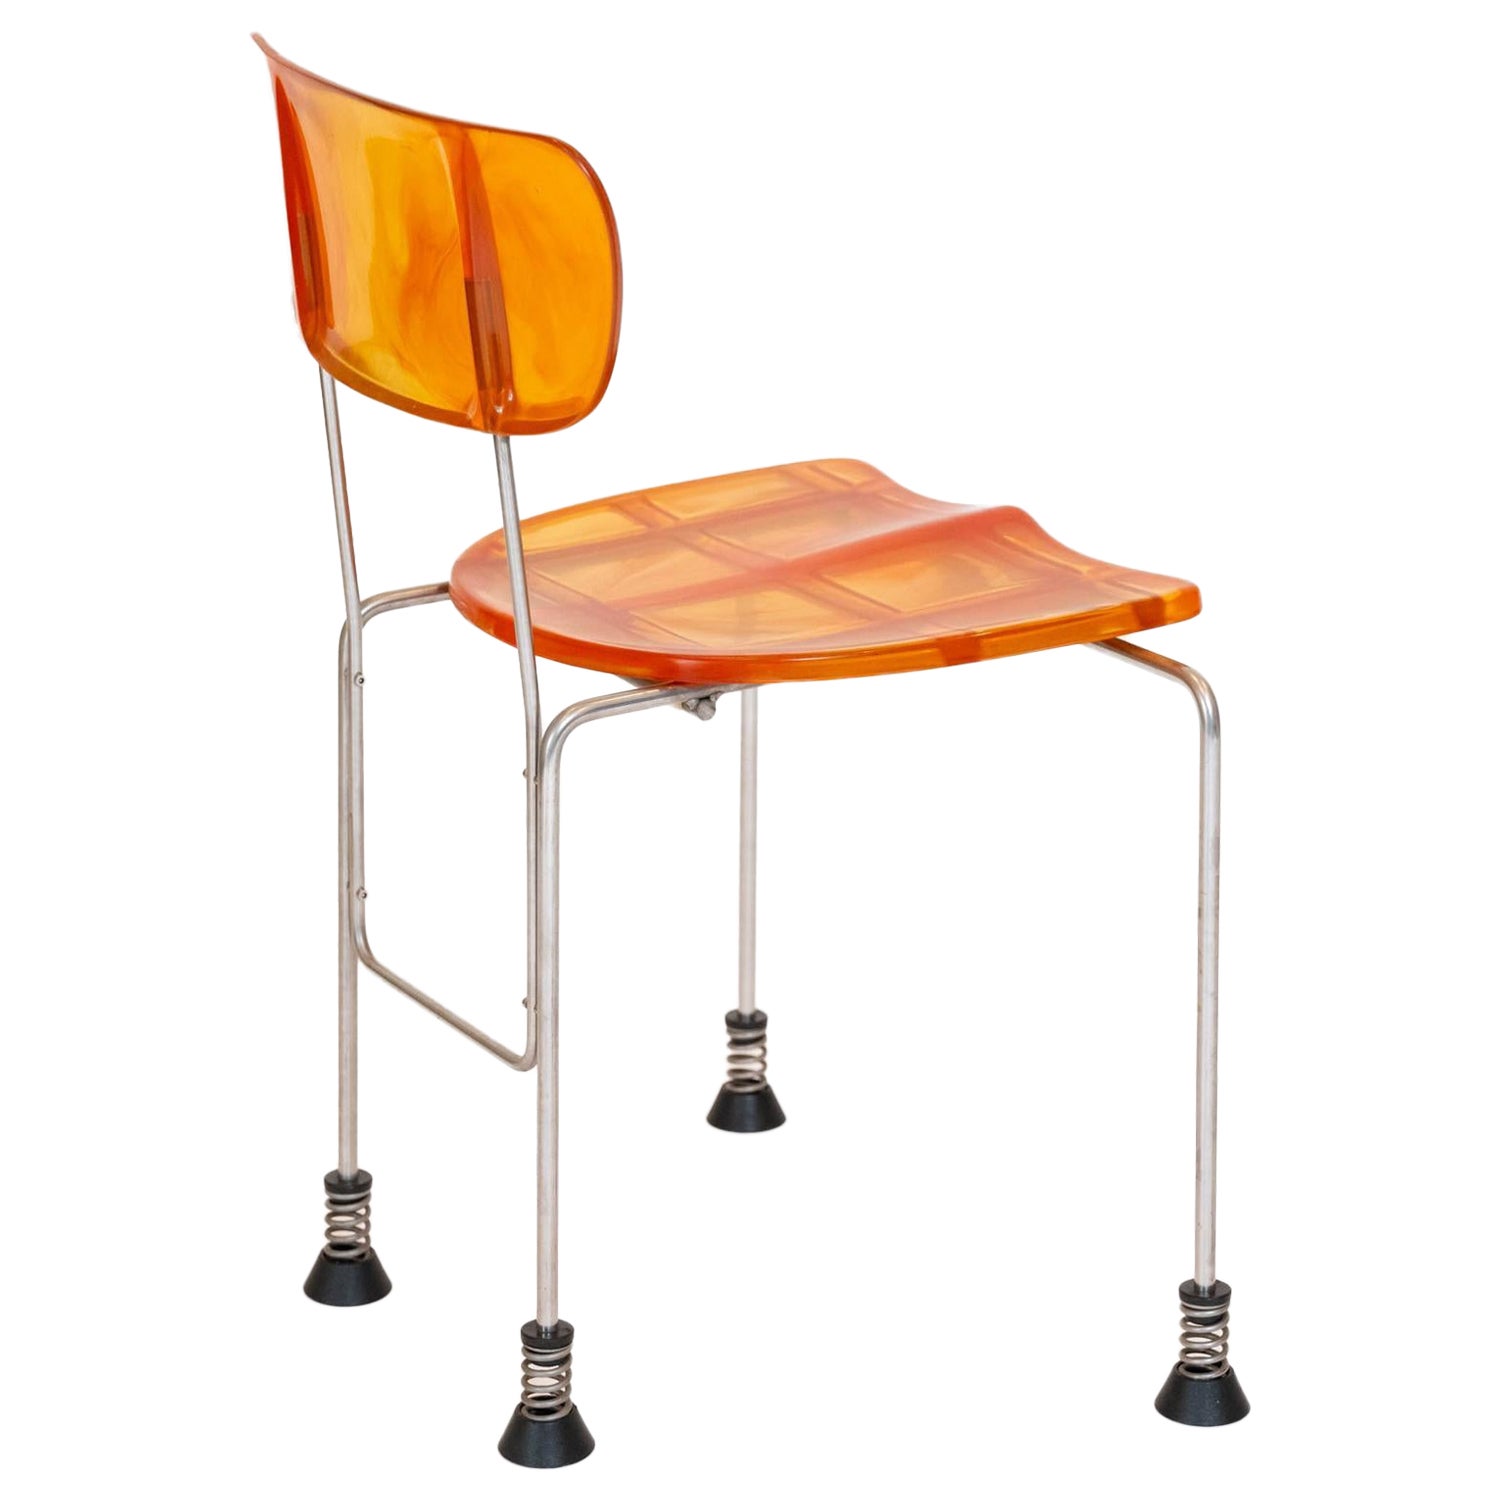 Broadway Chair by Gaetano Pesce for Bernini, Hand-Cast Resin, Post Modern Art